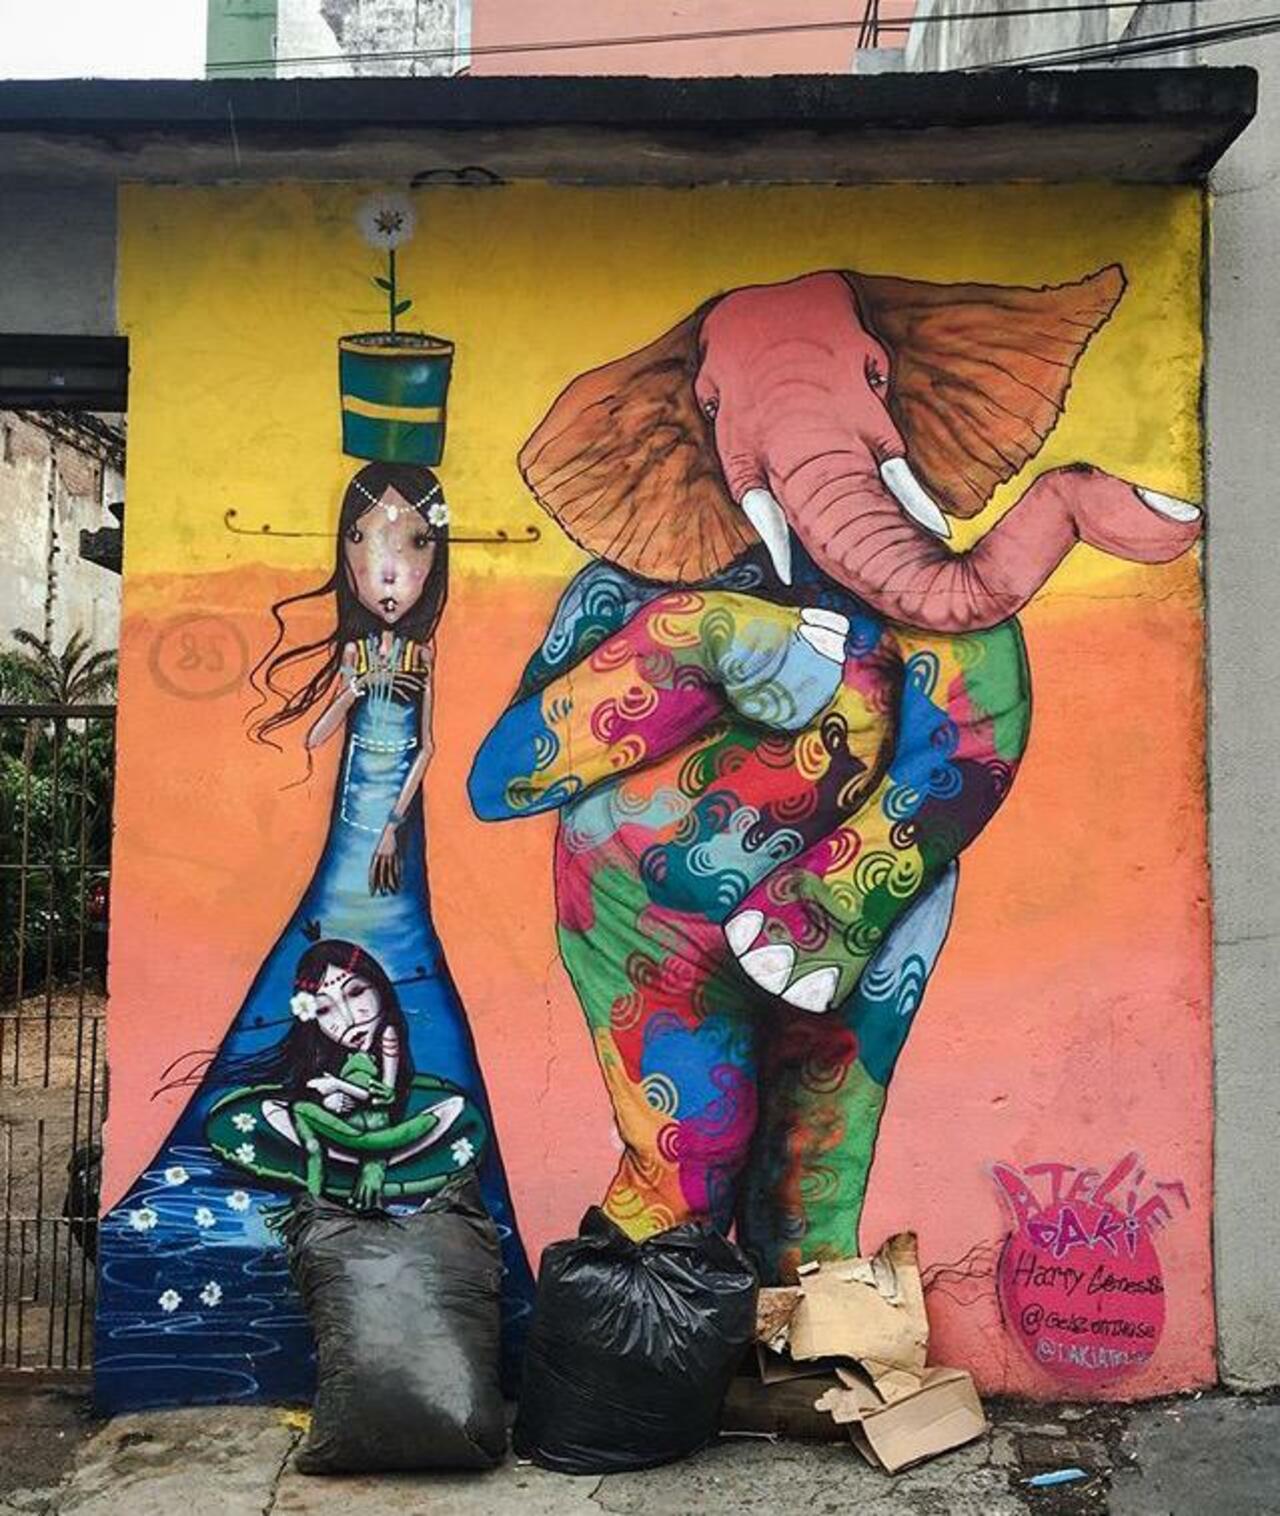 RT ArchaicManor "Street Art by Harry Geneis & Gelson in São Paulo 

#art #mural #graffiti #streetart http://t.co/T6oBVdrYTx yo"